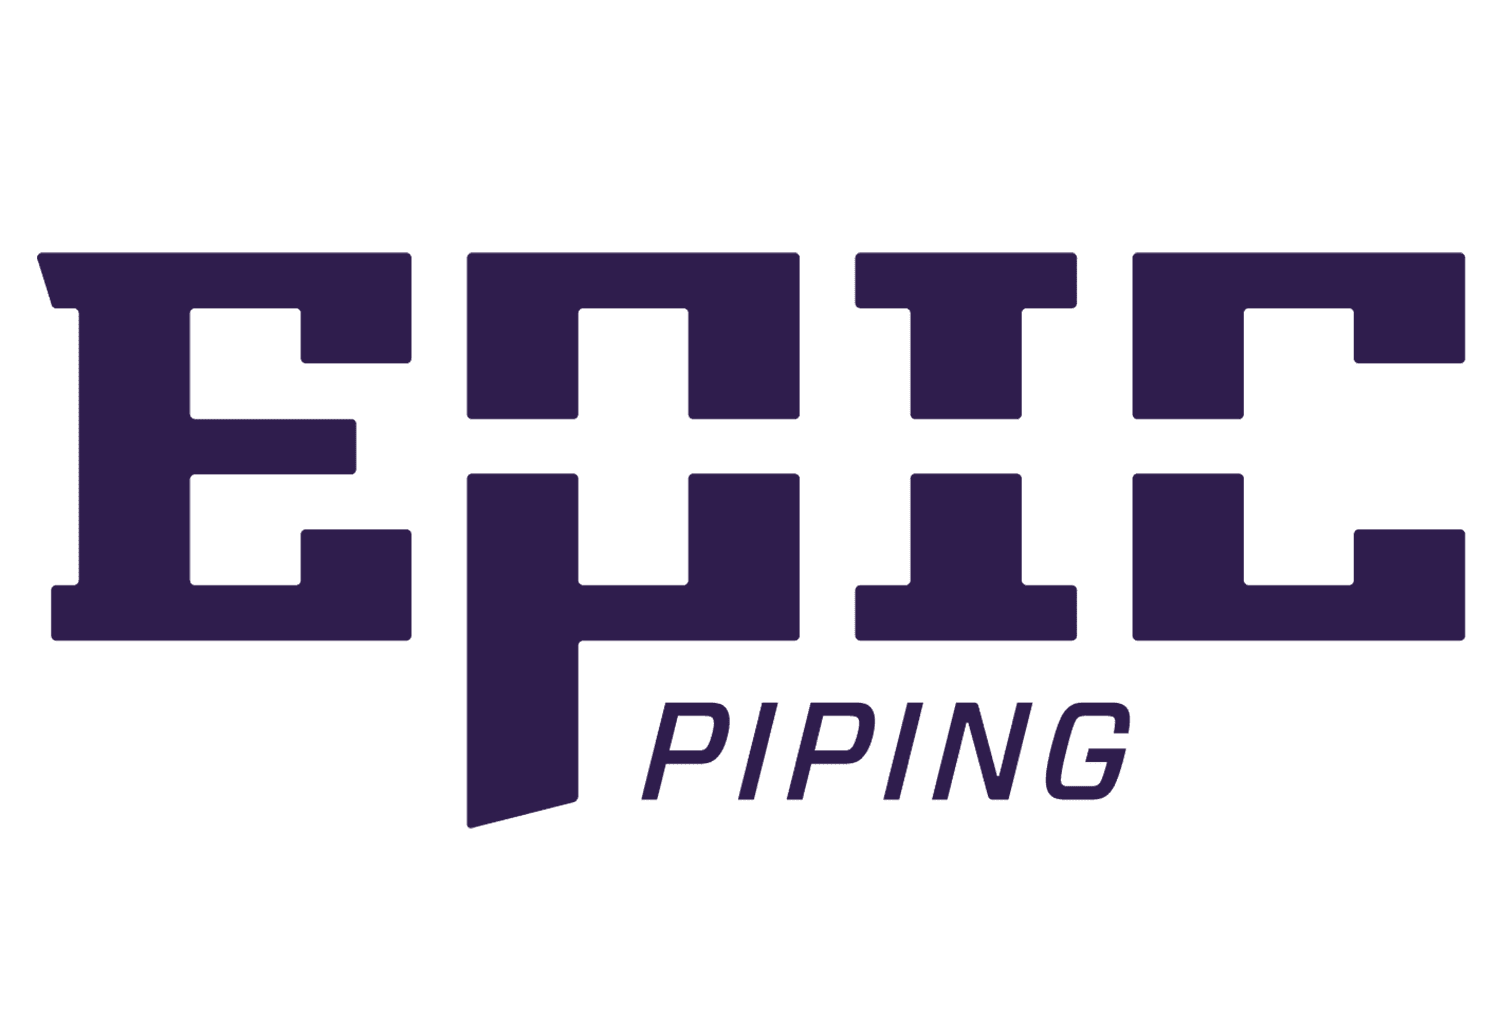 Epicpiping Portfolio Logo